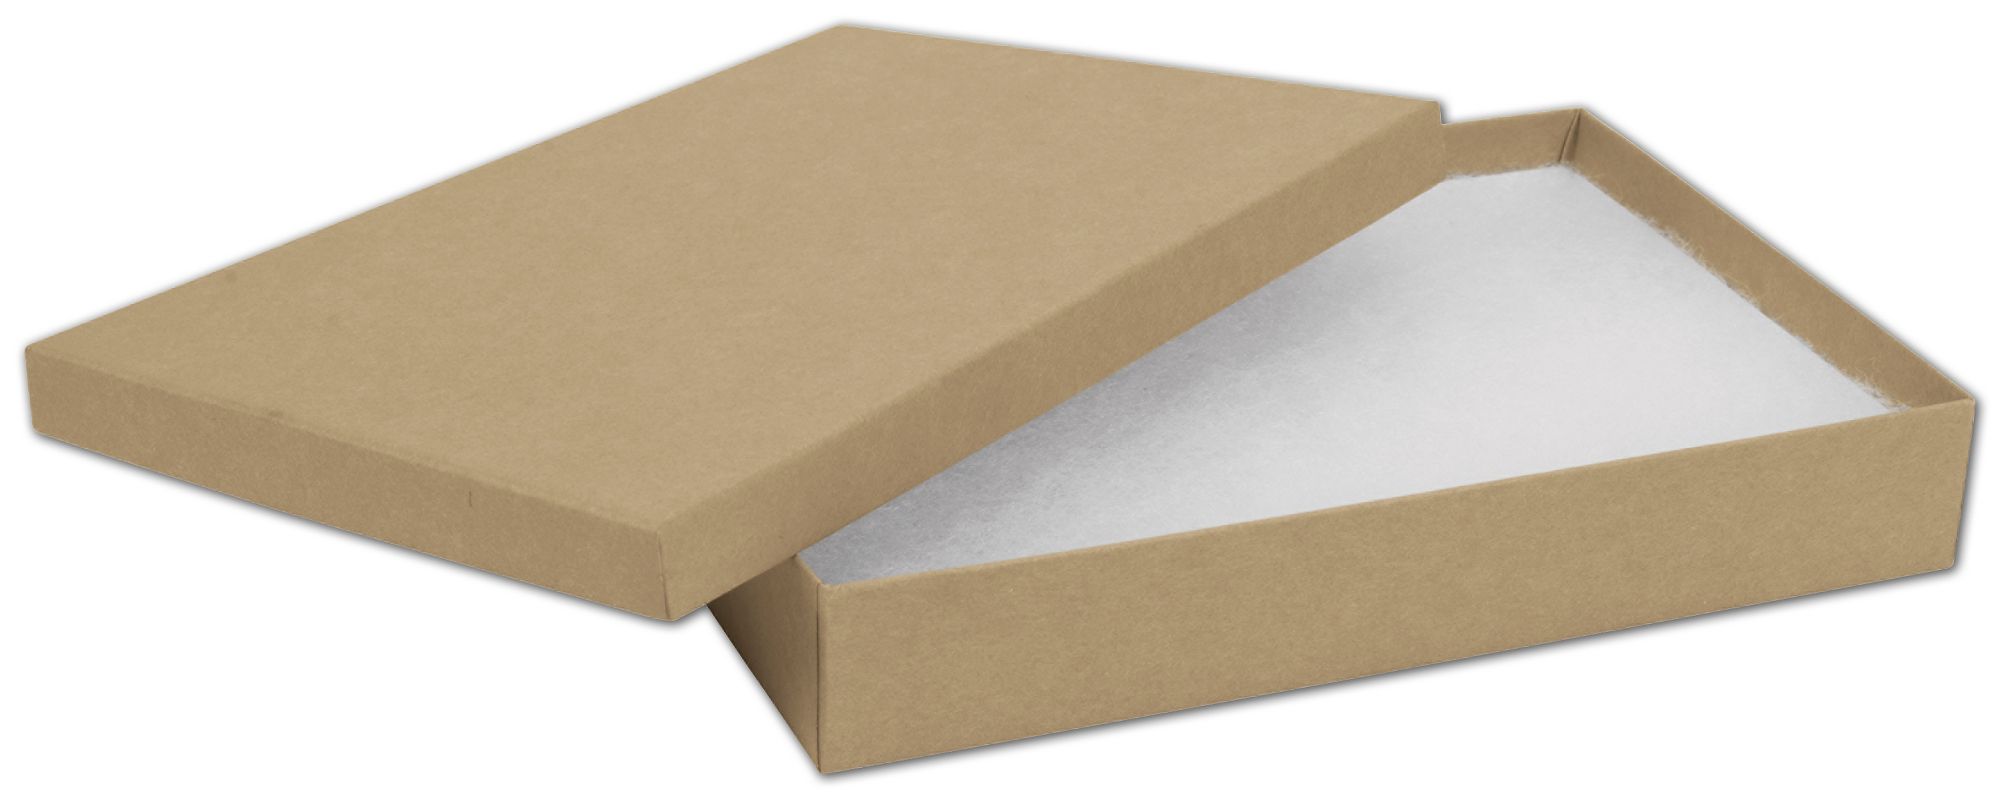 5 COTTON FILLED LARGE JEWELRY GIFT BOXES 8″ x 5.5″ x 1.25″ Kraft –  Piggyback Shop